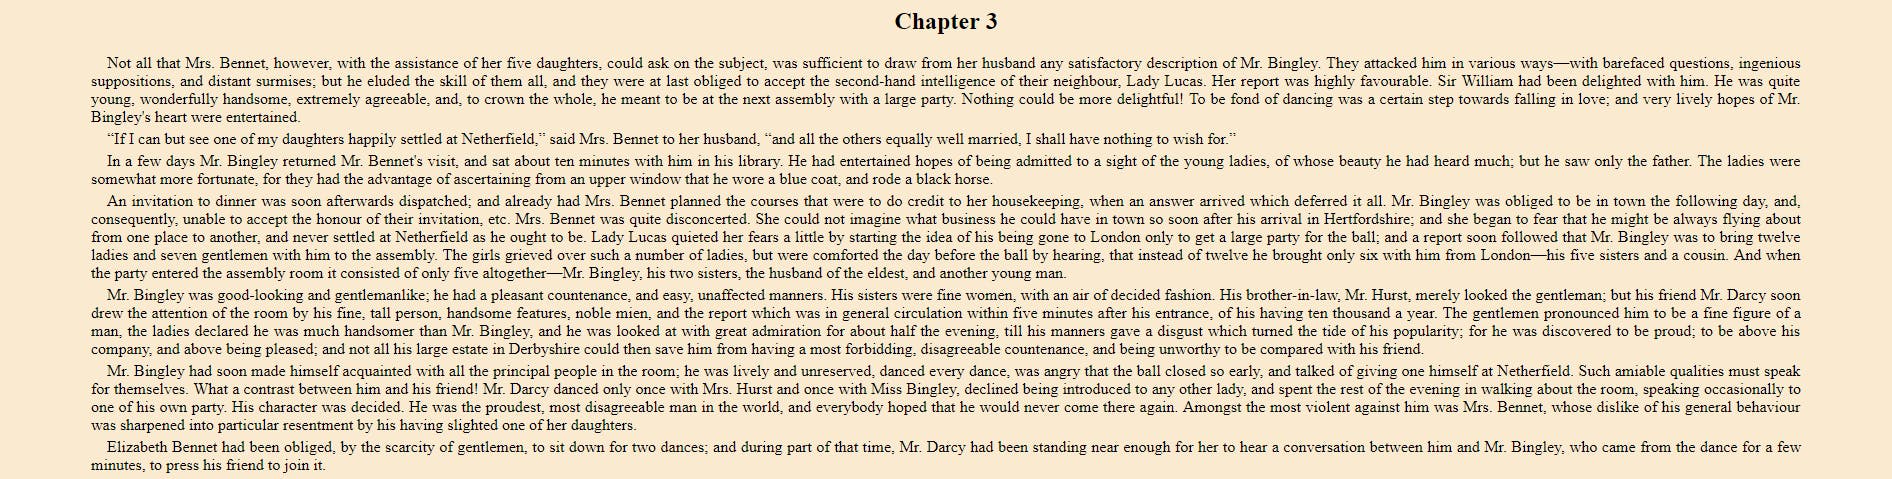 The beginning of Chapter 3 in Jane Austen’s *Pride and Prejudice*